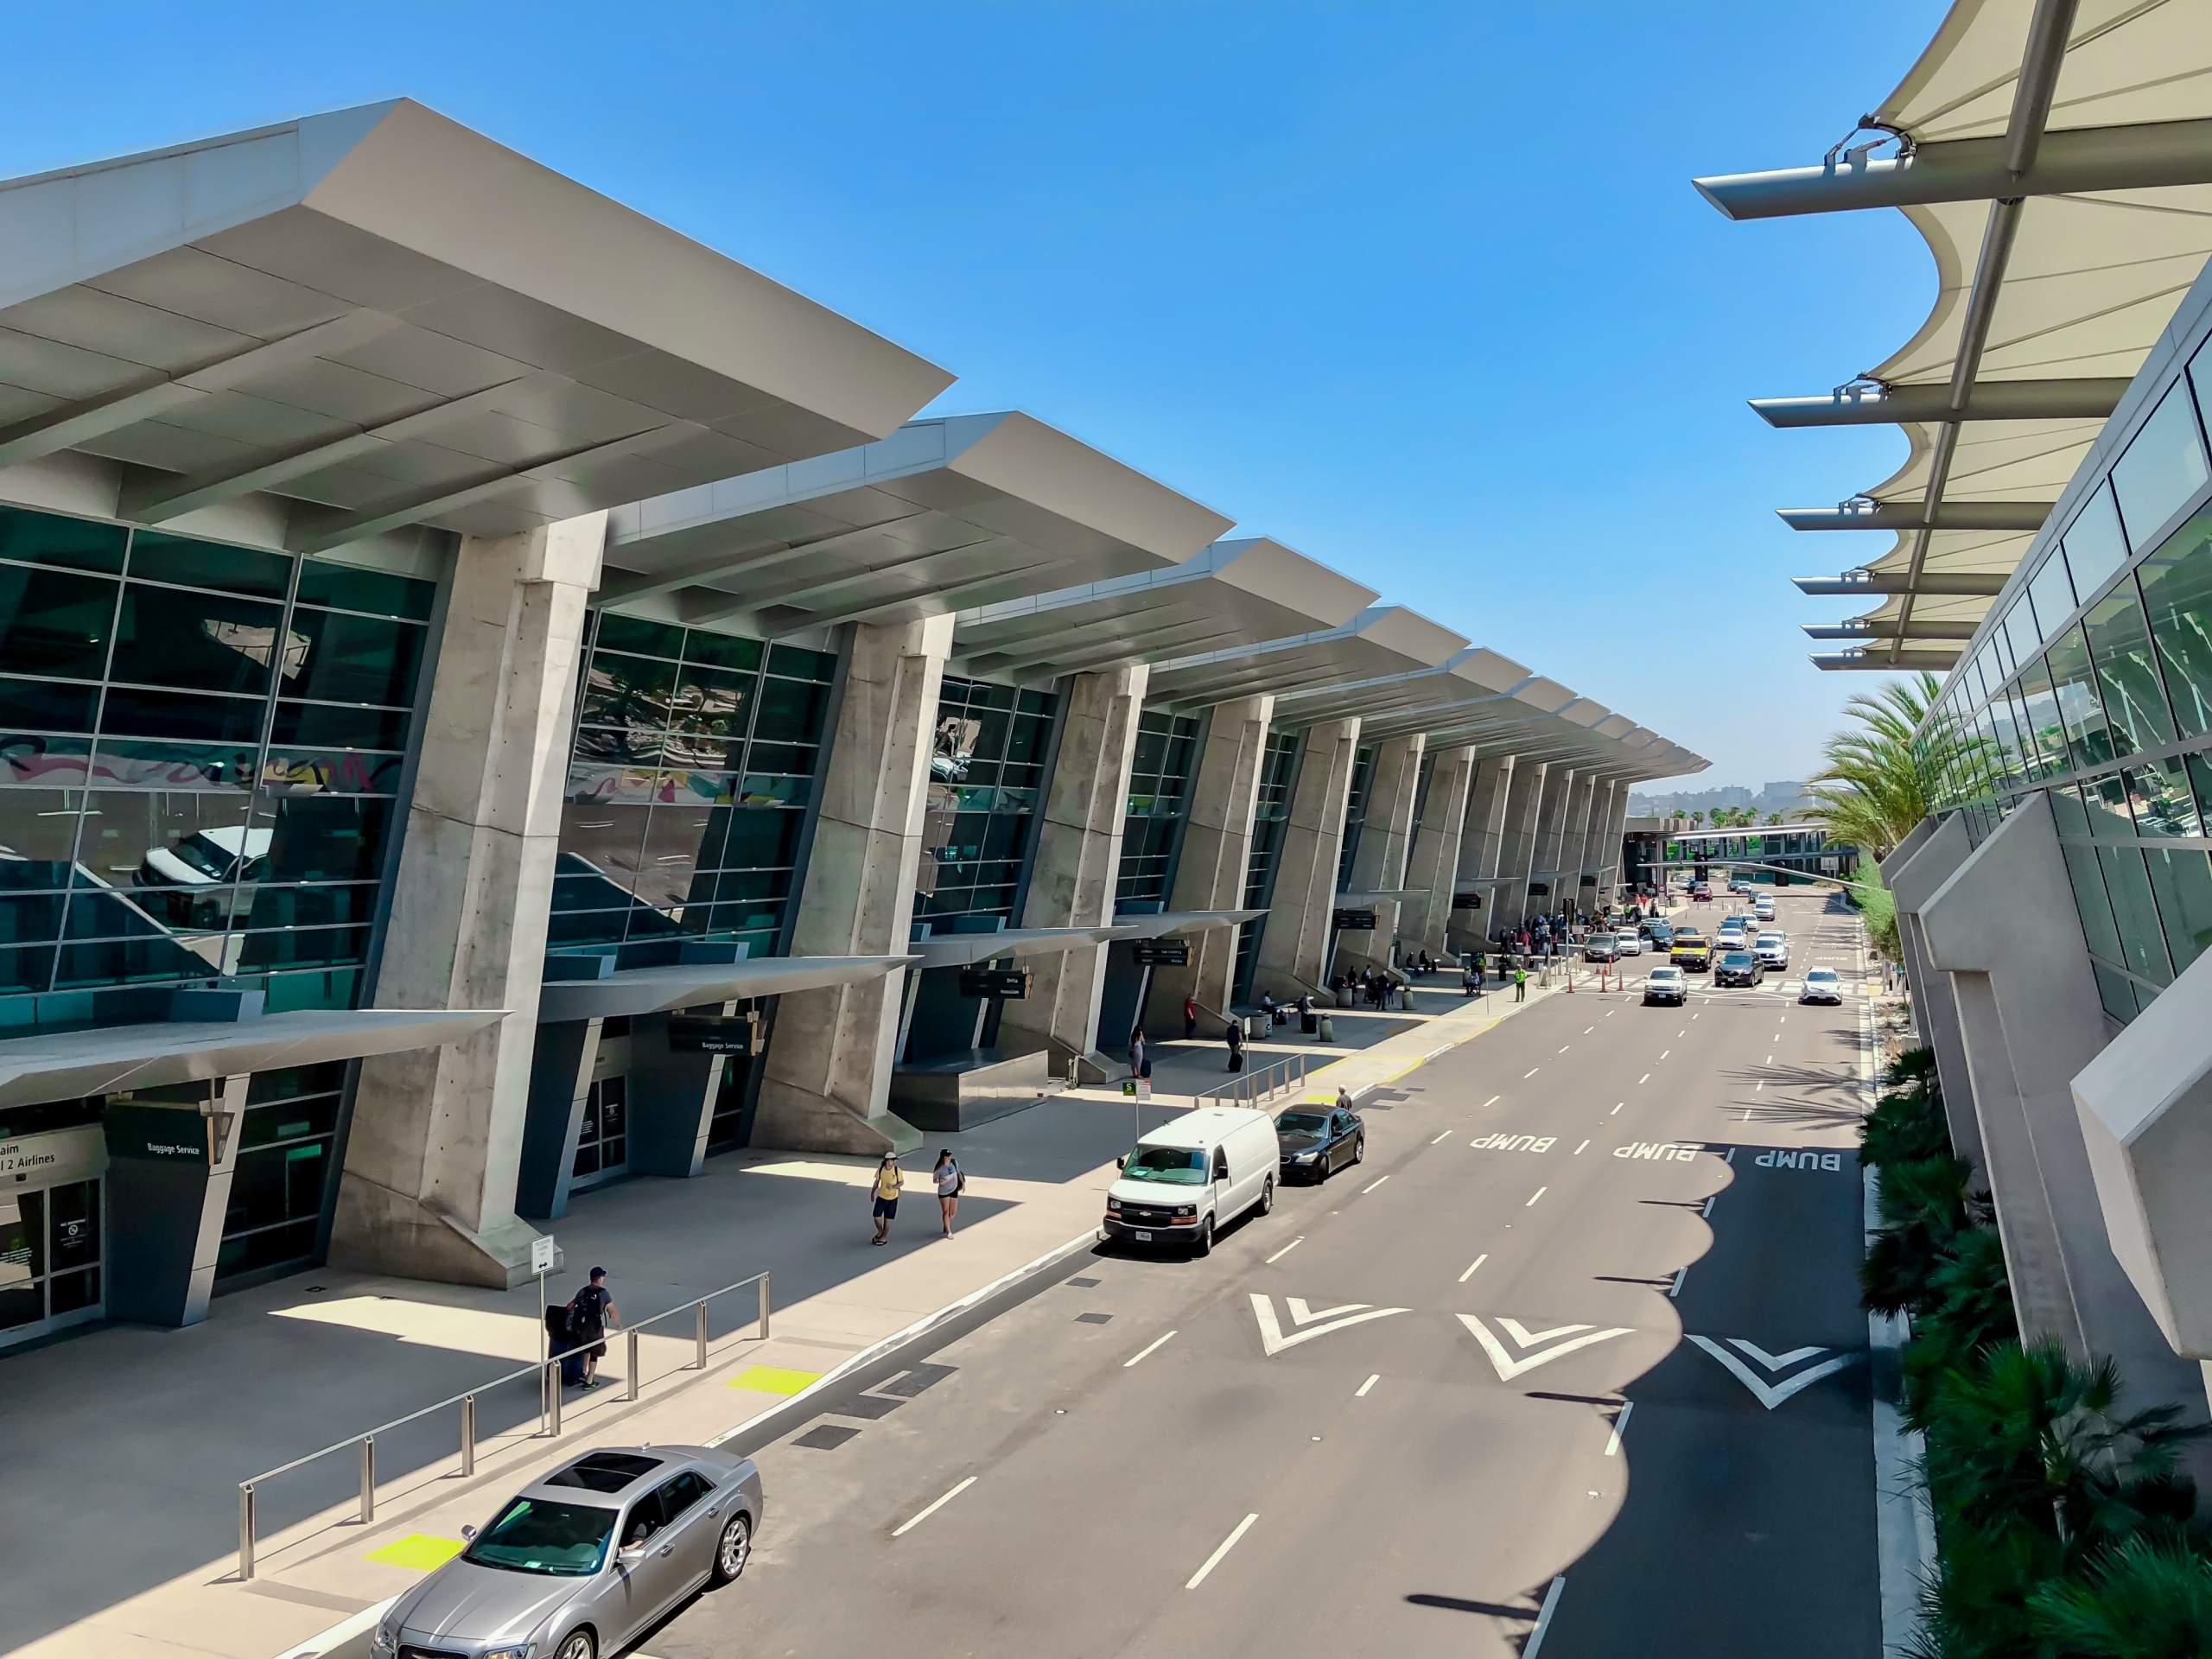 San Diego International Airport Goes Green